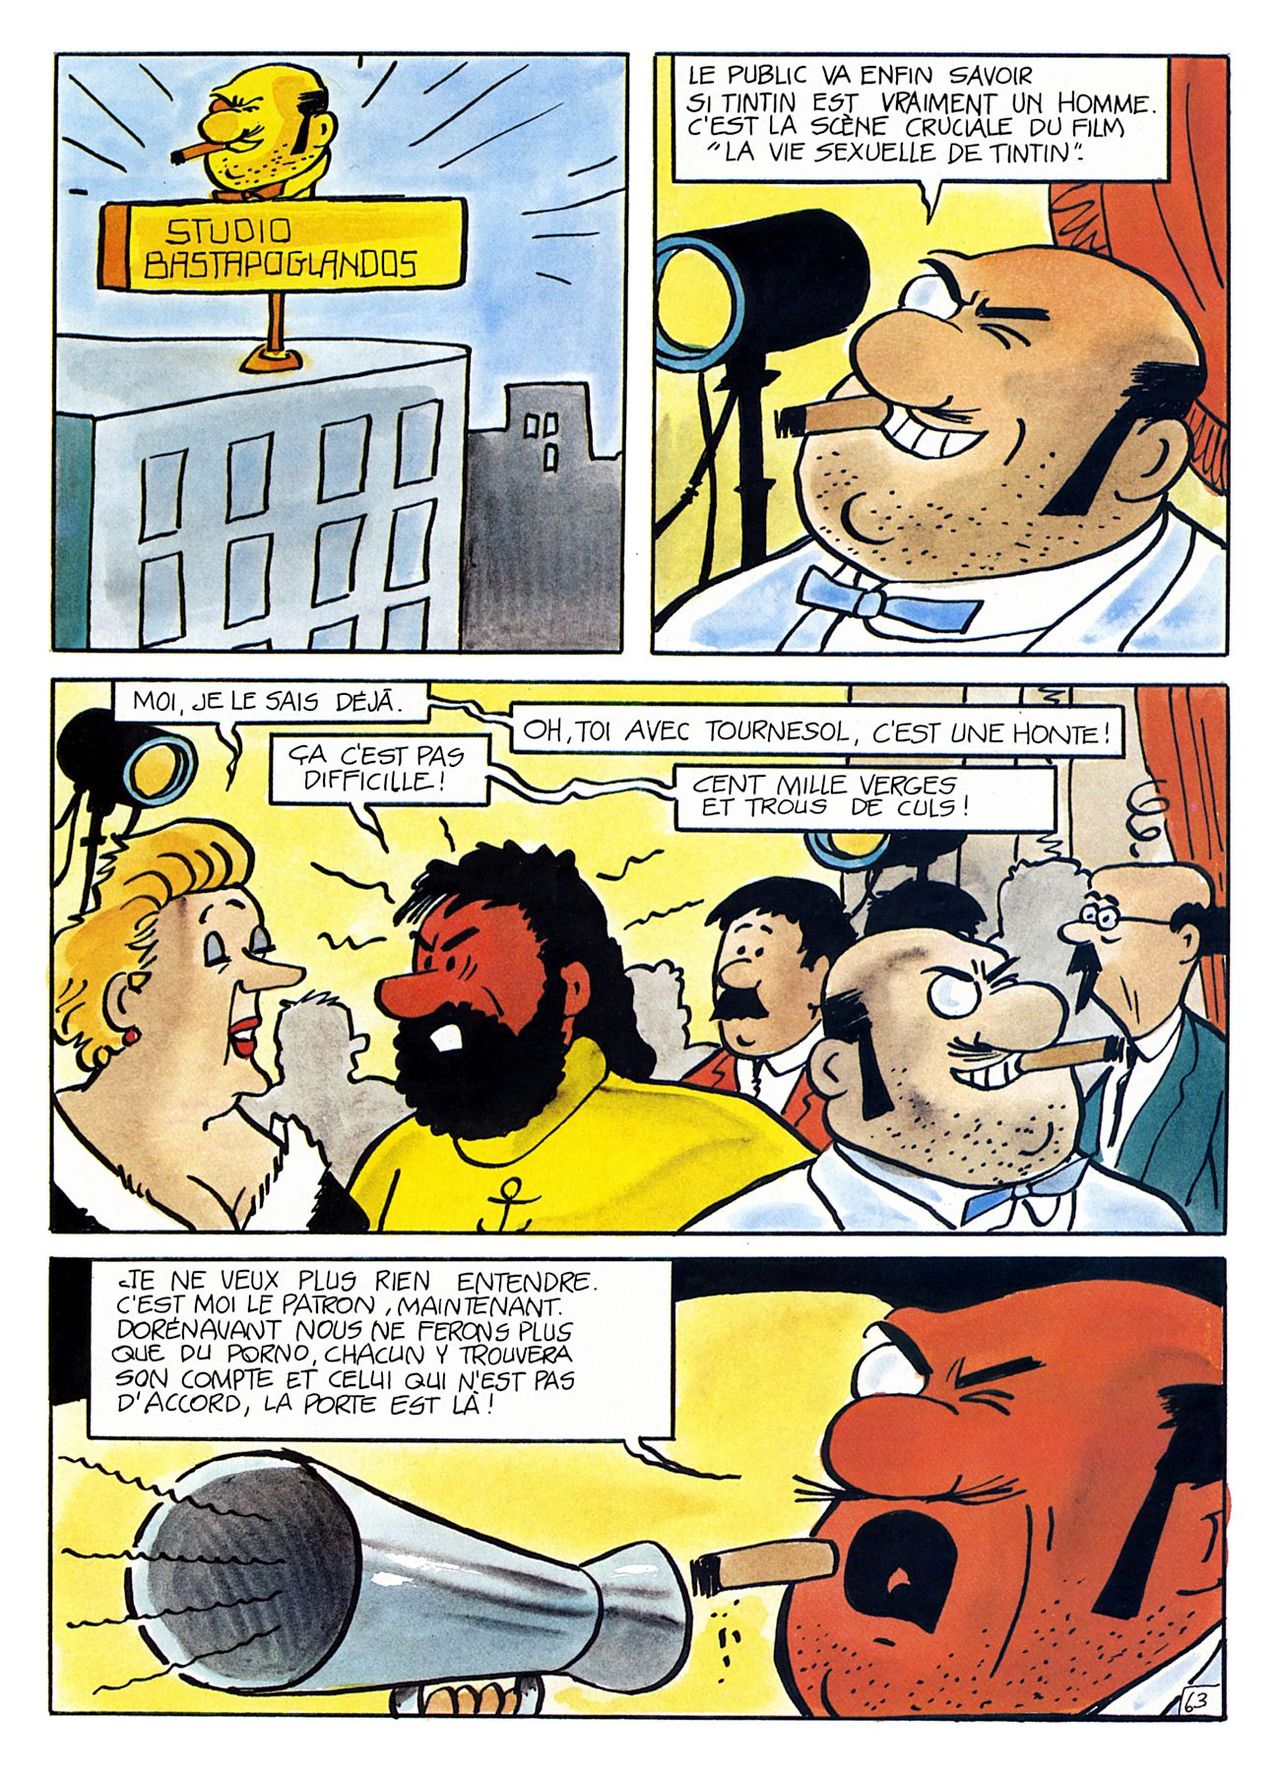 La Vie Sexuelle De Tintin numero d'image 66